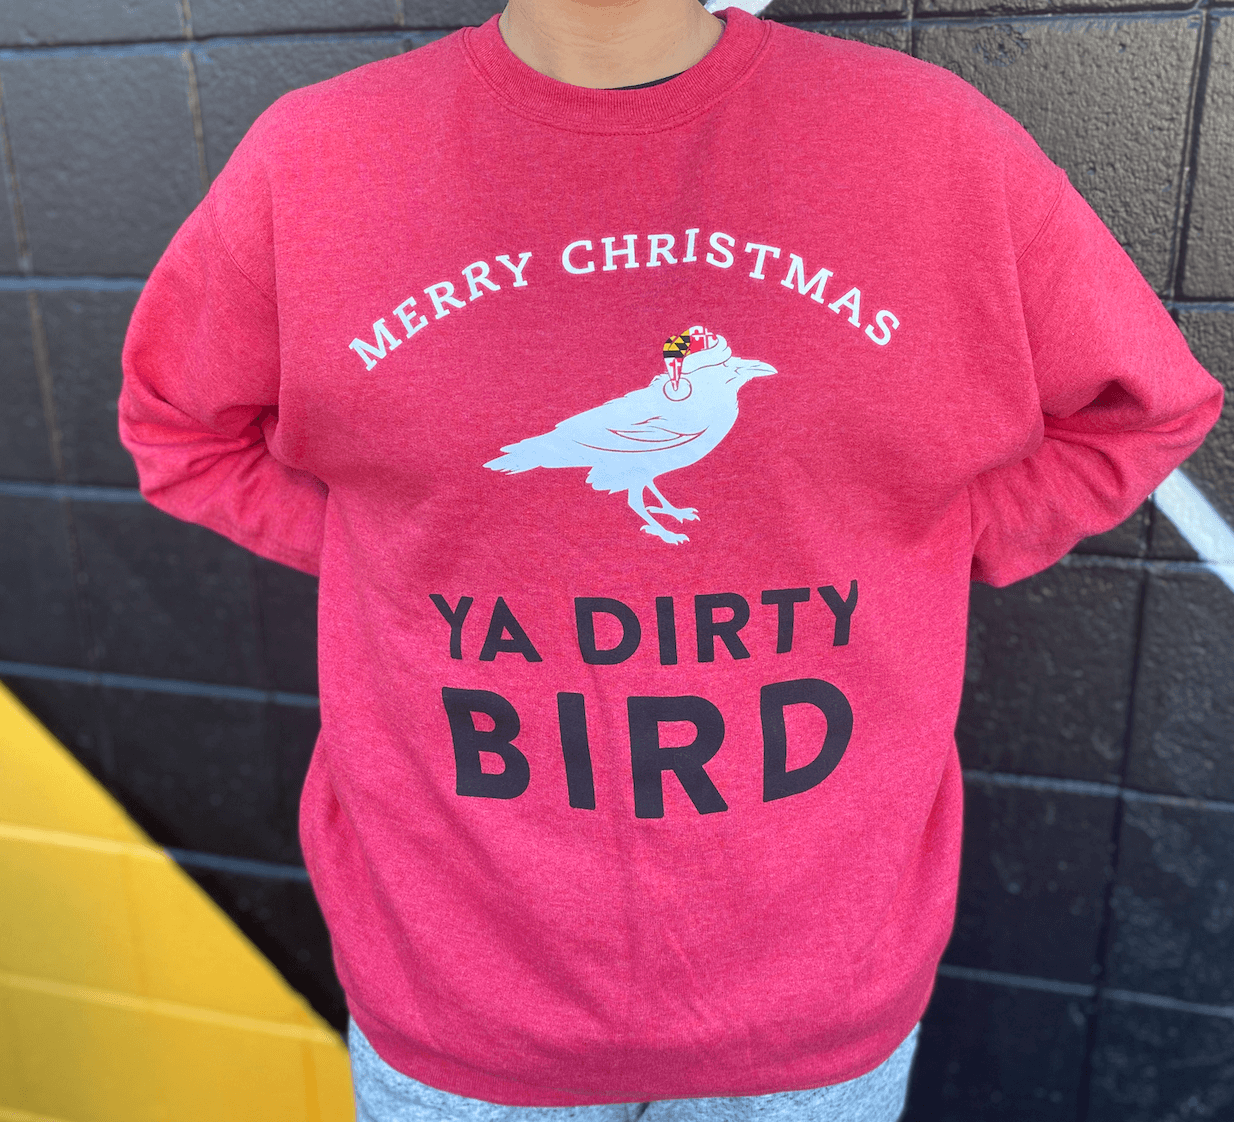 Ya Dirty Bird (Red) / Crew Sweatshirt - Route One Apparel